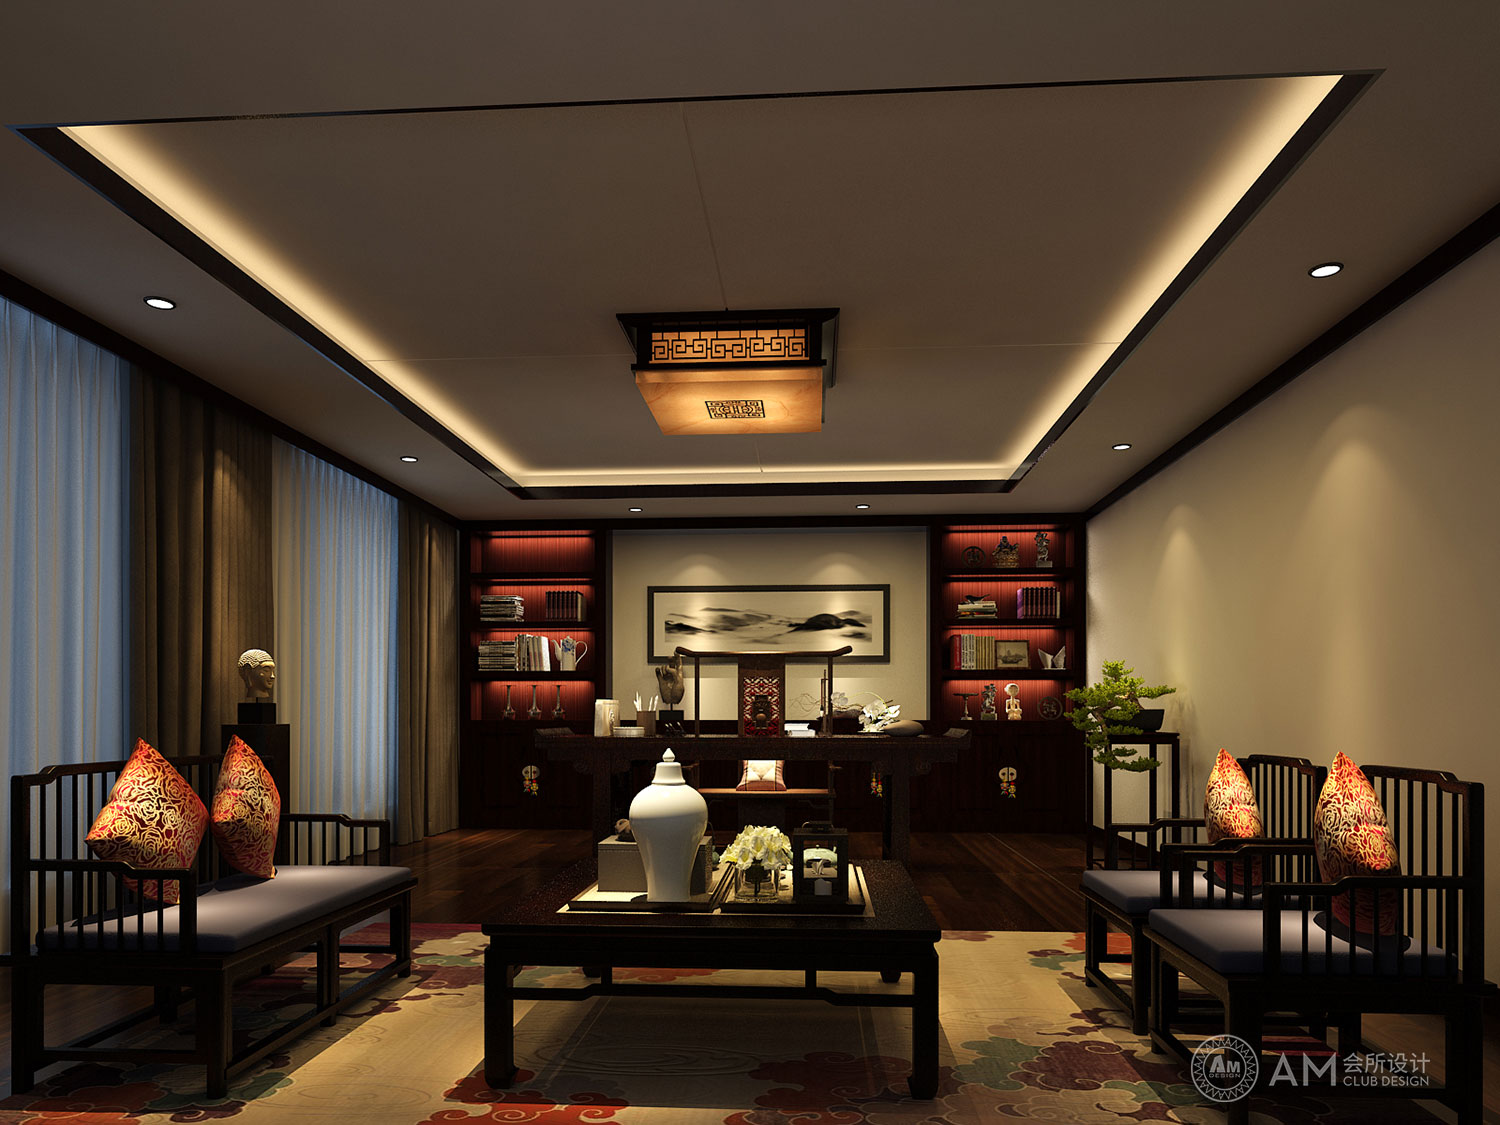 AM DESIGN | Design of negotiation area of qilinhui Top Spa Club